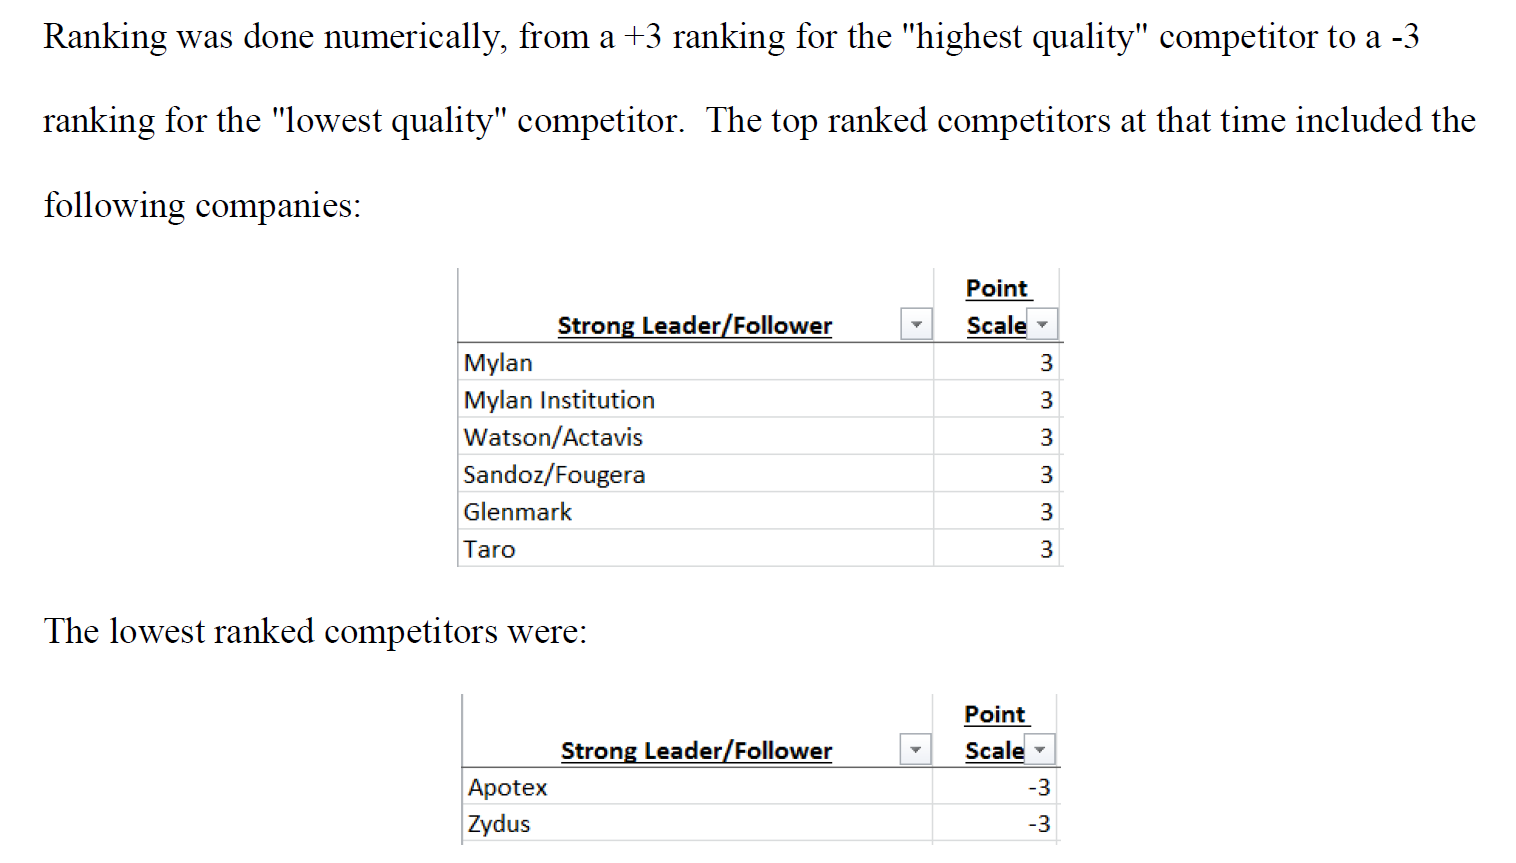 Top ranked competitors